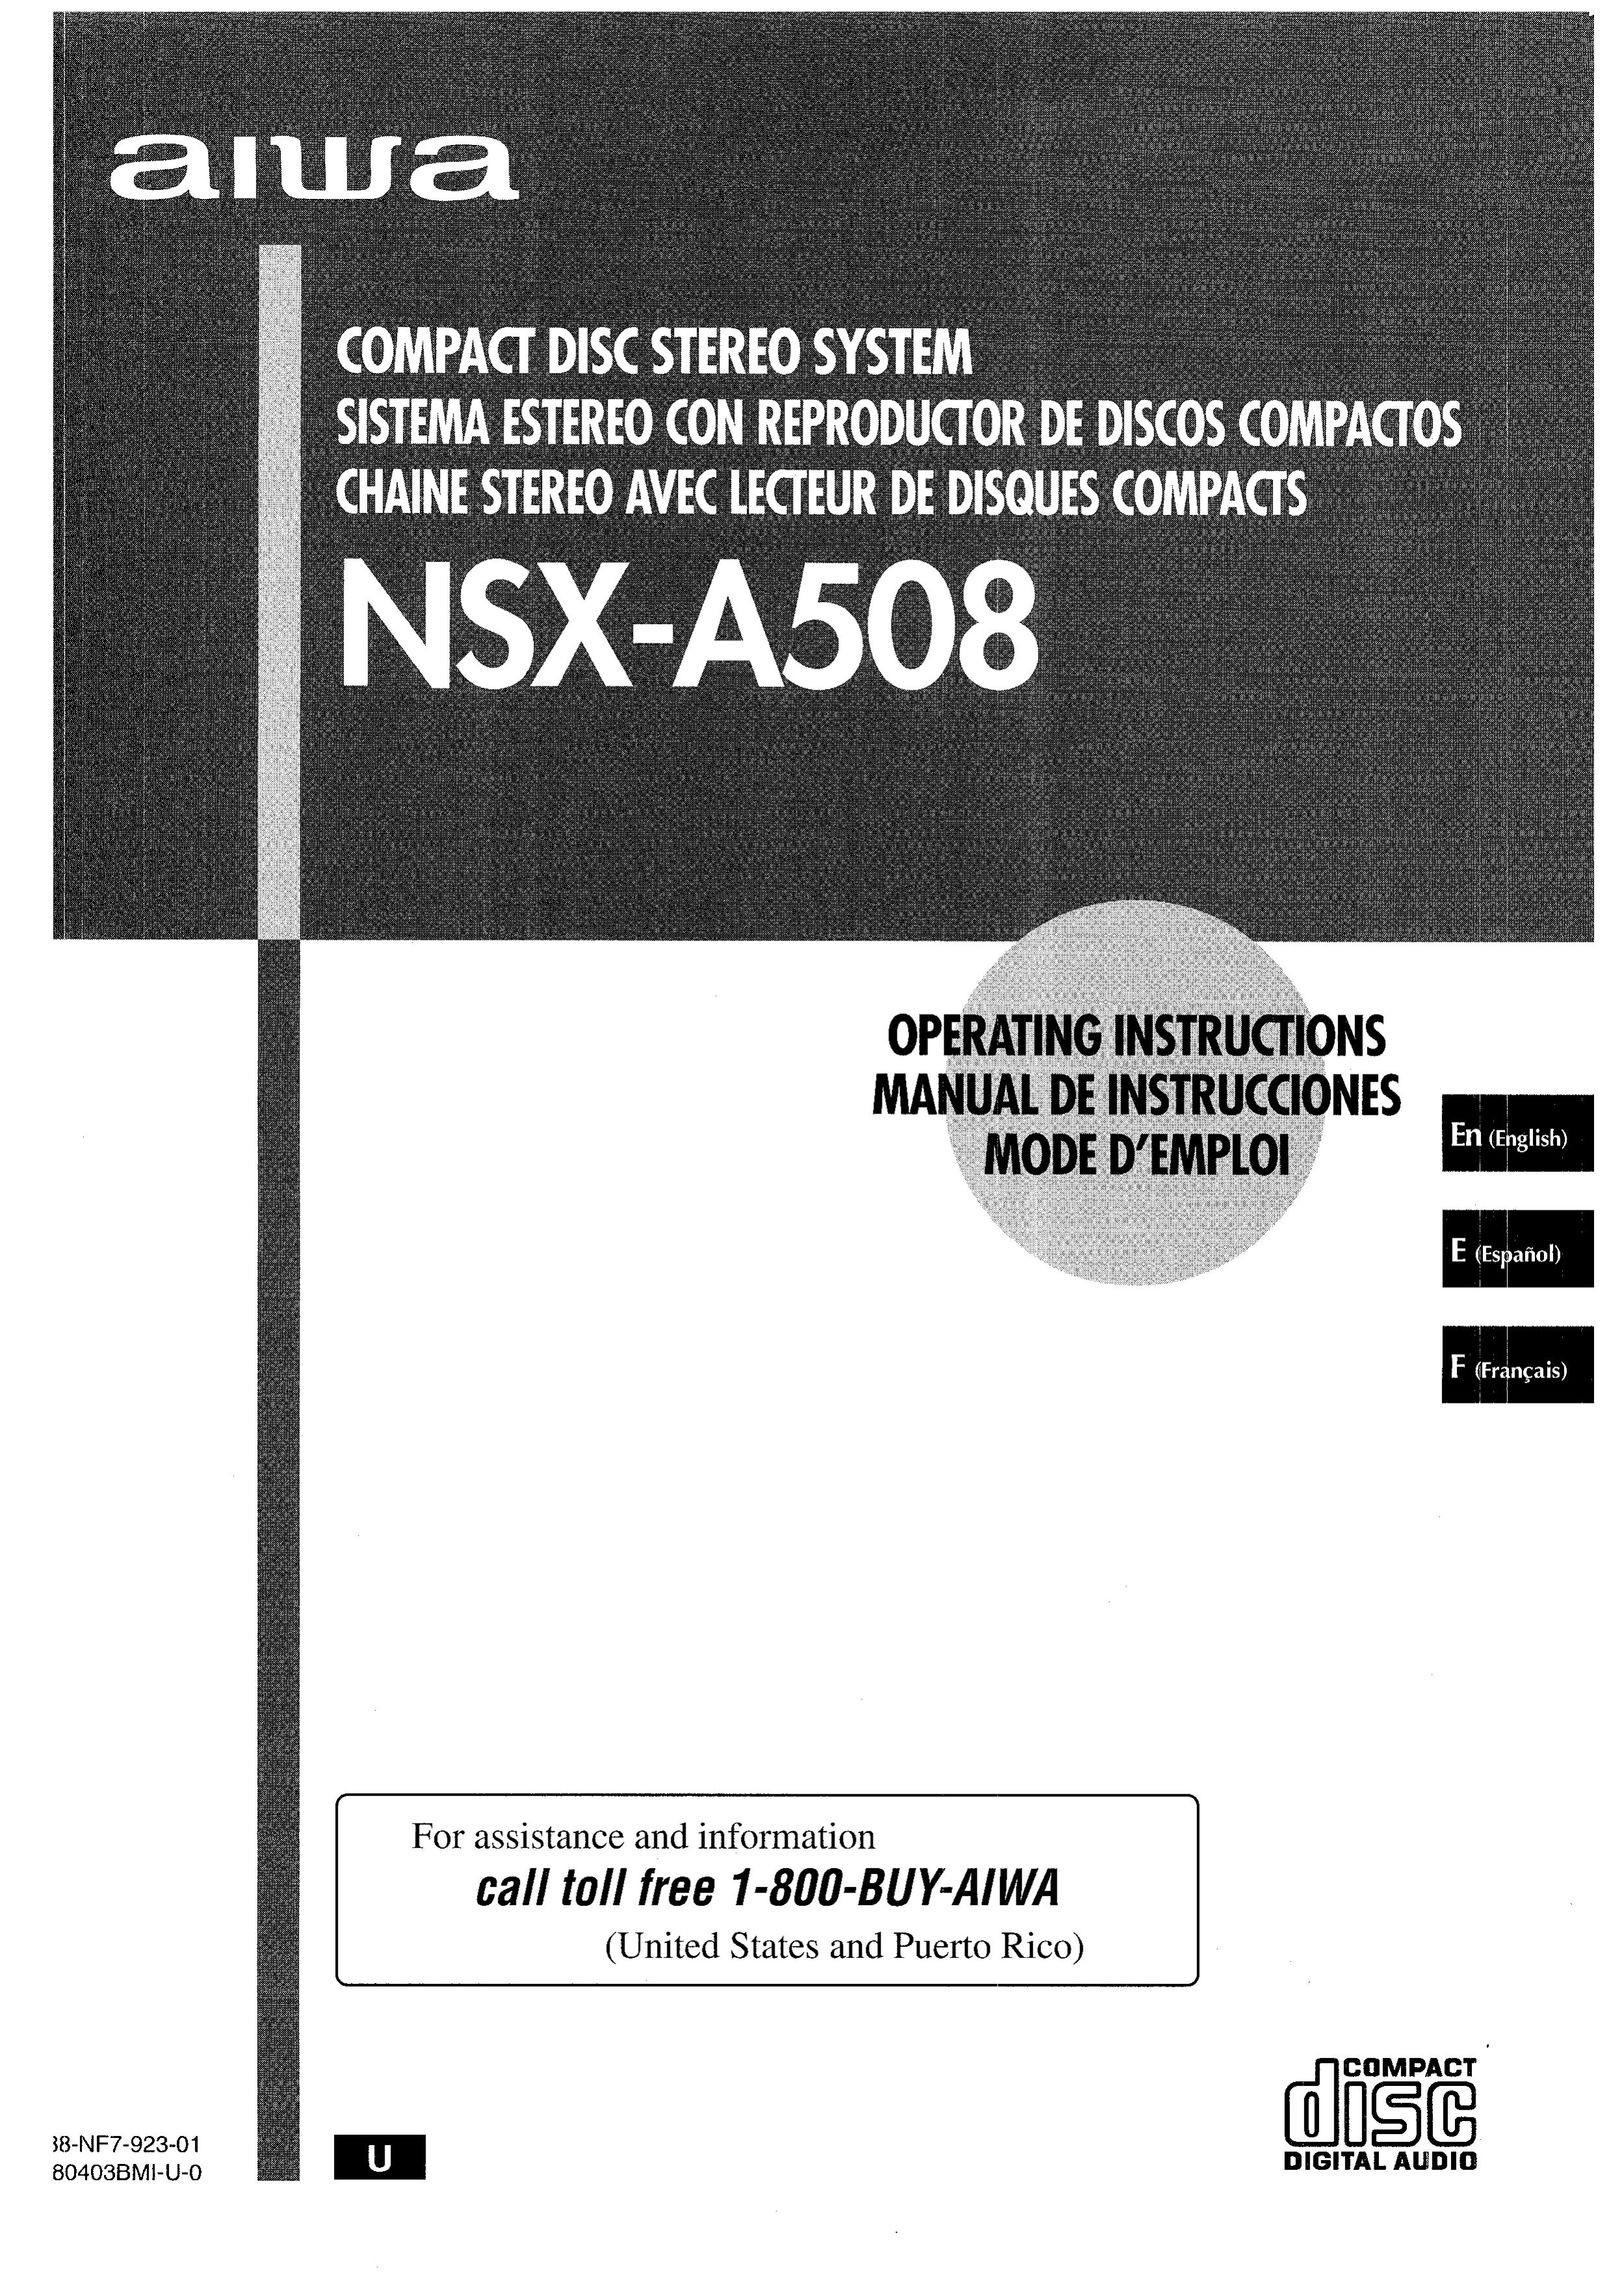 Aiwa NSX-A508 CD Player User Manual (Page 1)